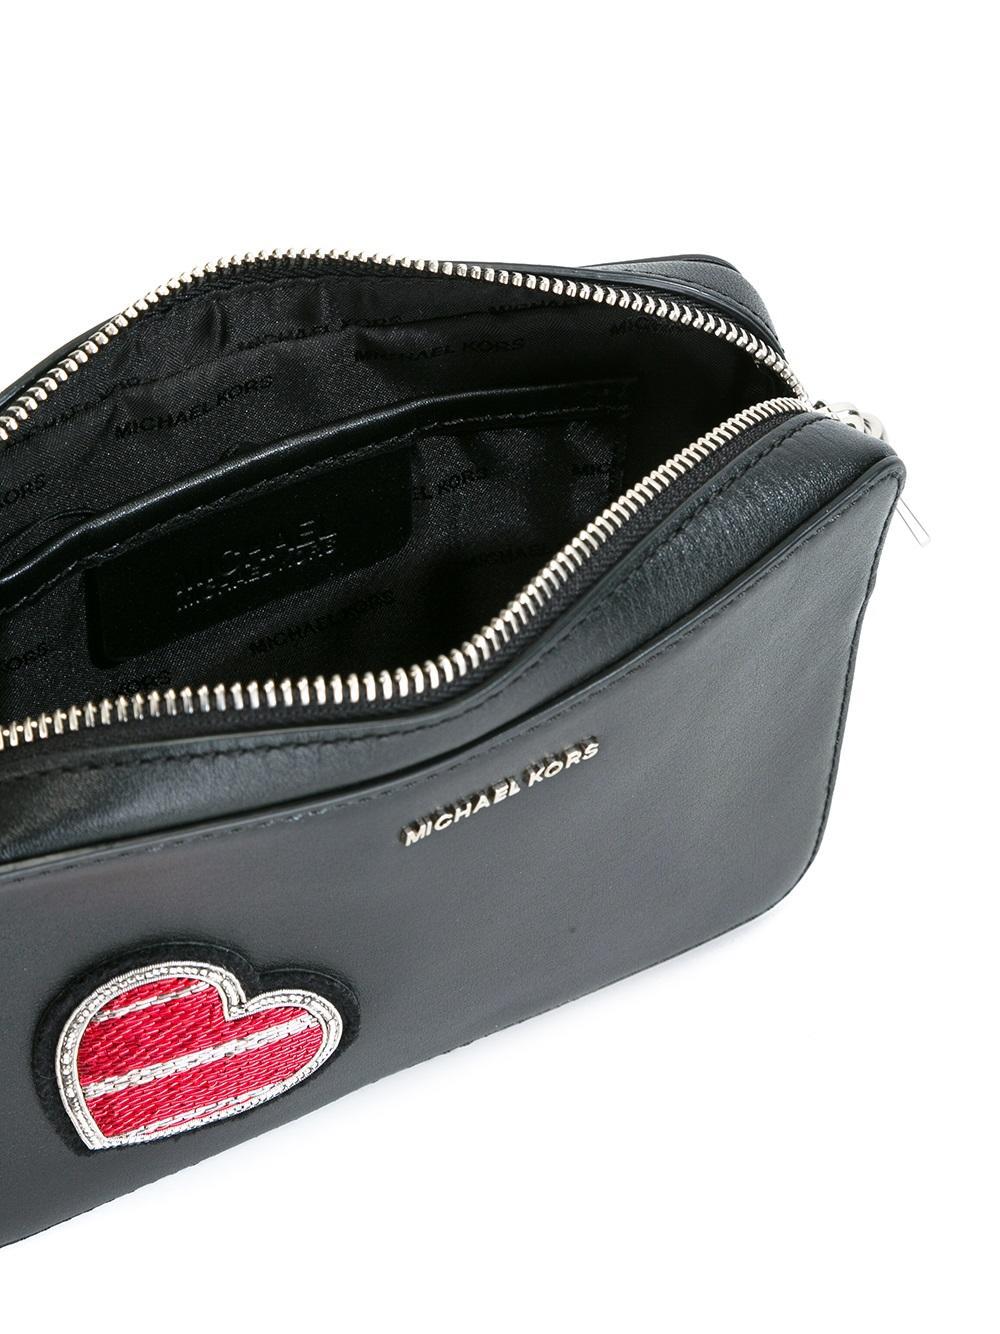 MICHAEL Michael Kors Leather Medium Heart Crossbody Bag in Black - Lyst